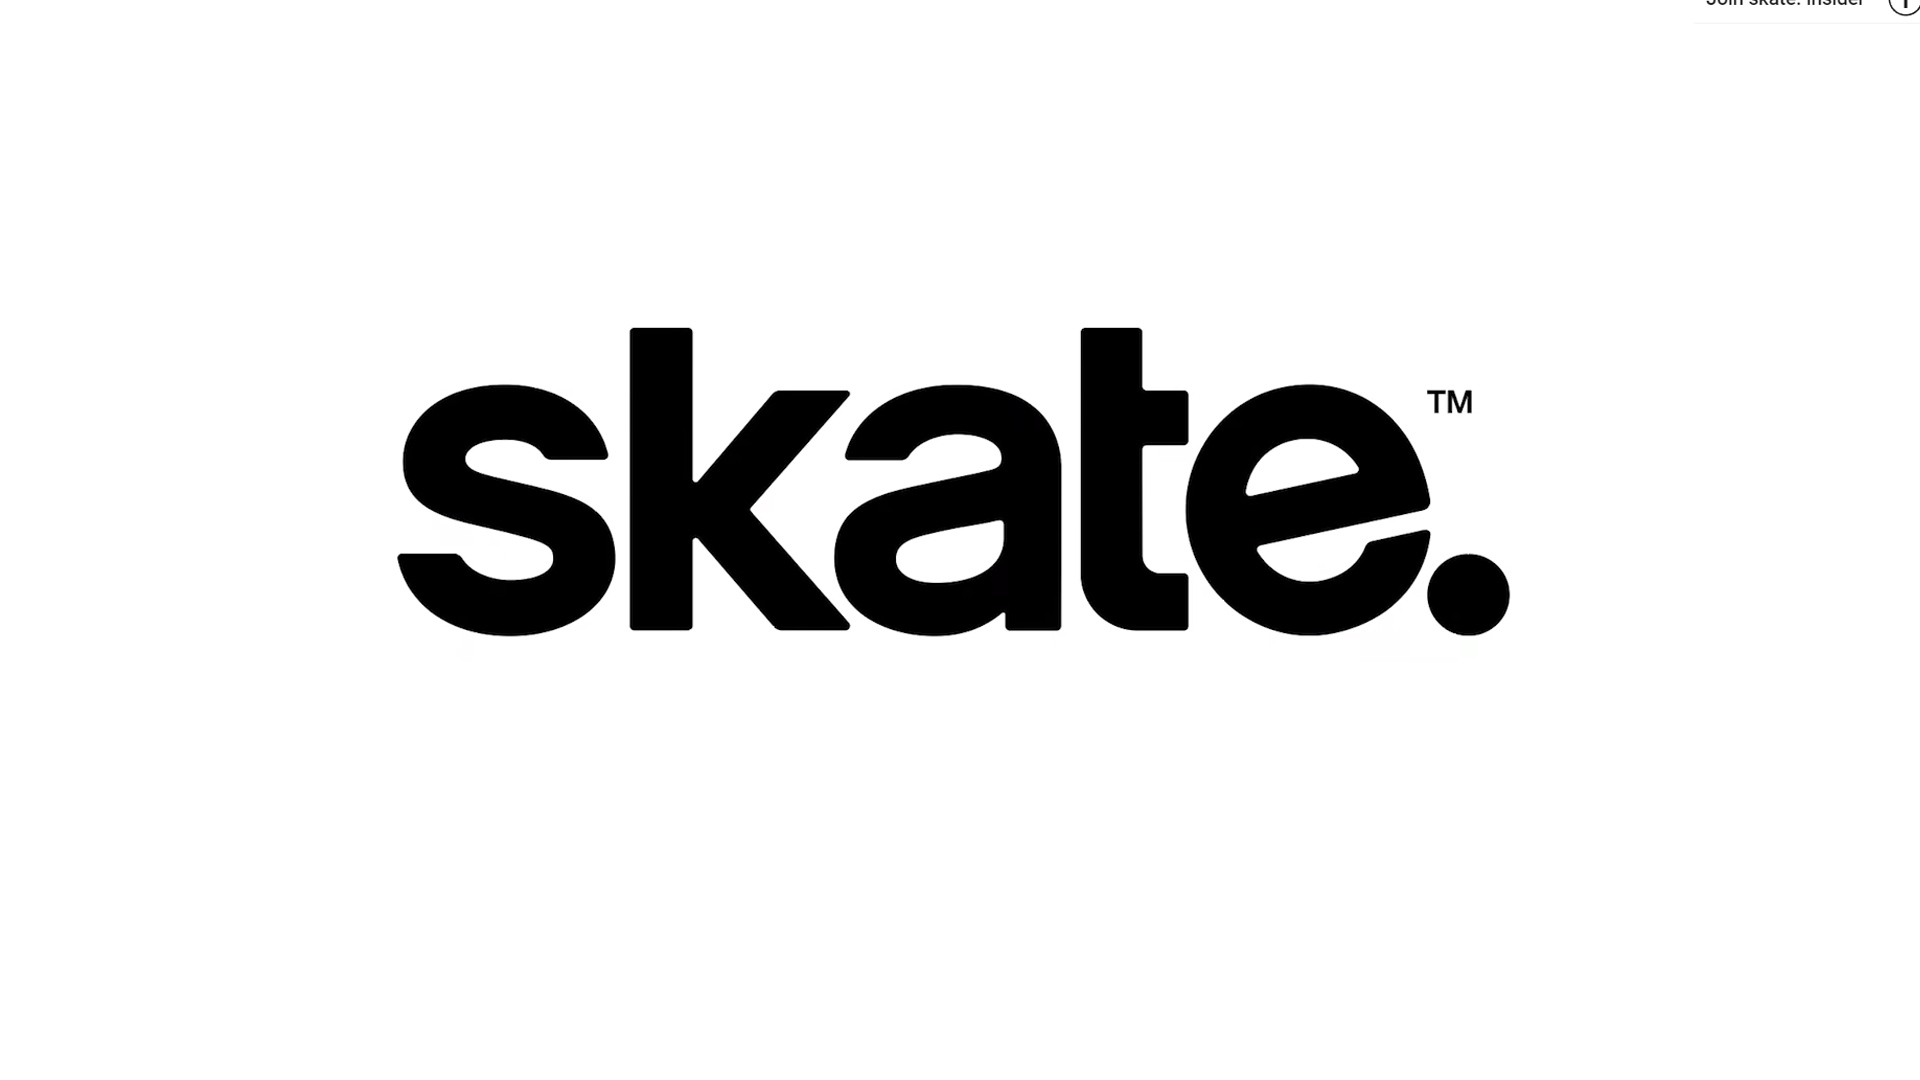 Skate 4 Playtest: How to sign up for alpha